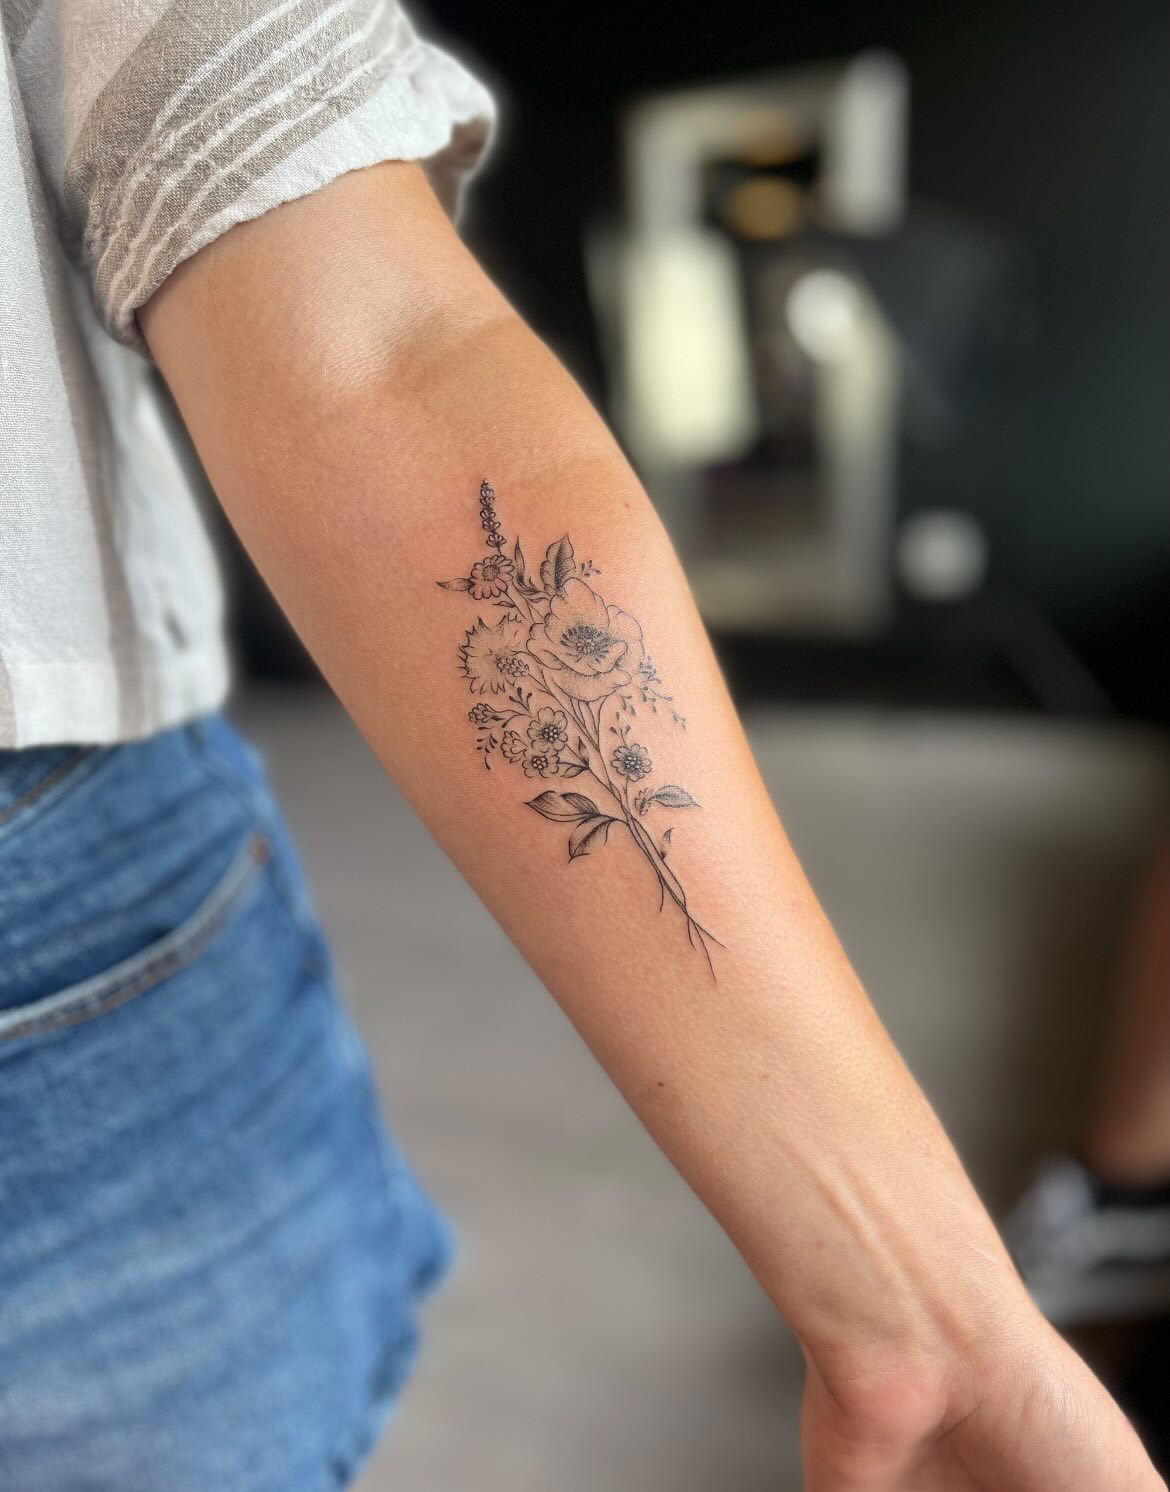 Fine line black and grey tattoo of a flower posy by tattoo artist Alessandra Clivio.